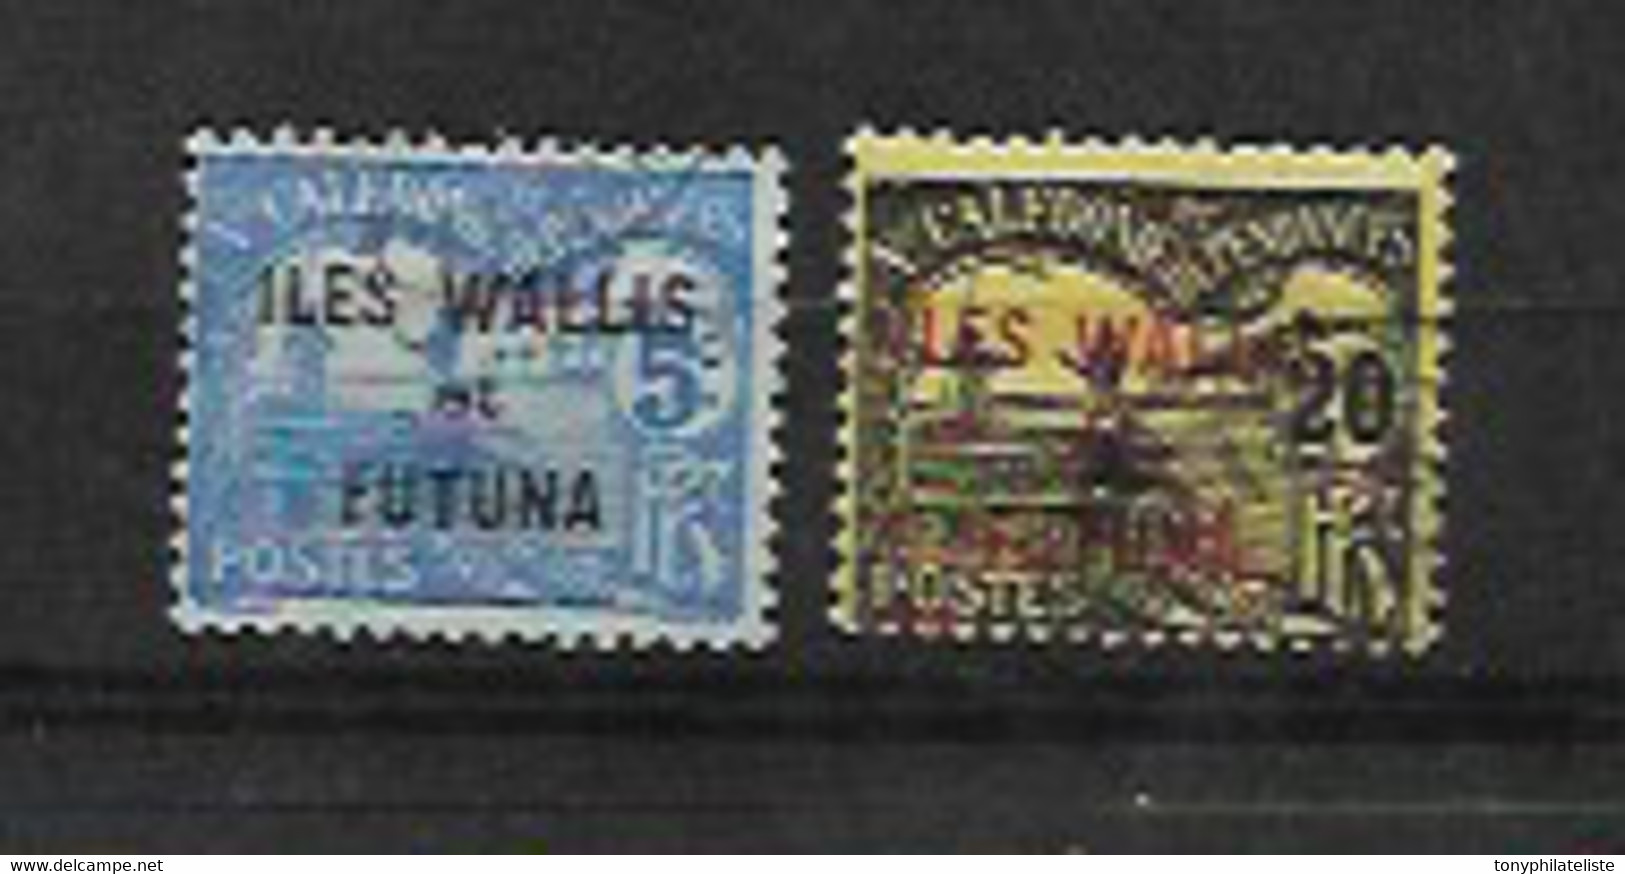 Timbres Taxes De Wallis Et Futuna De 1920 N°1 + N°4 Oblitérés - Impuestos